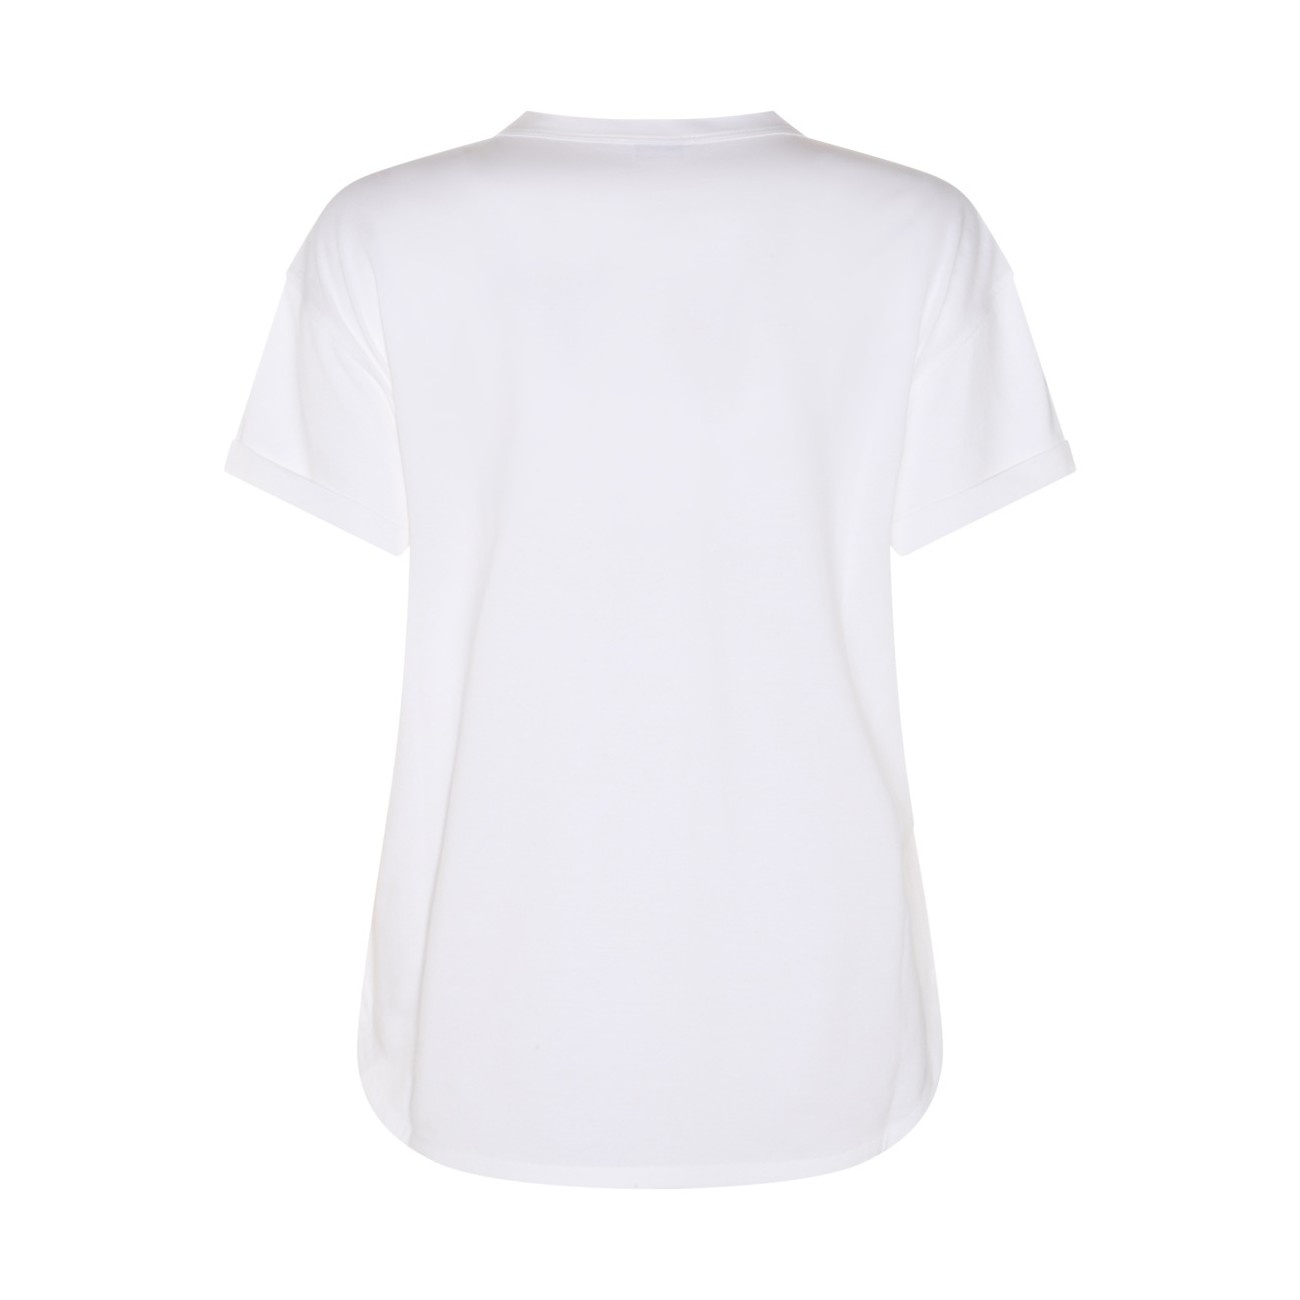 white cotton t-shirt - 2